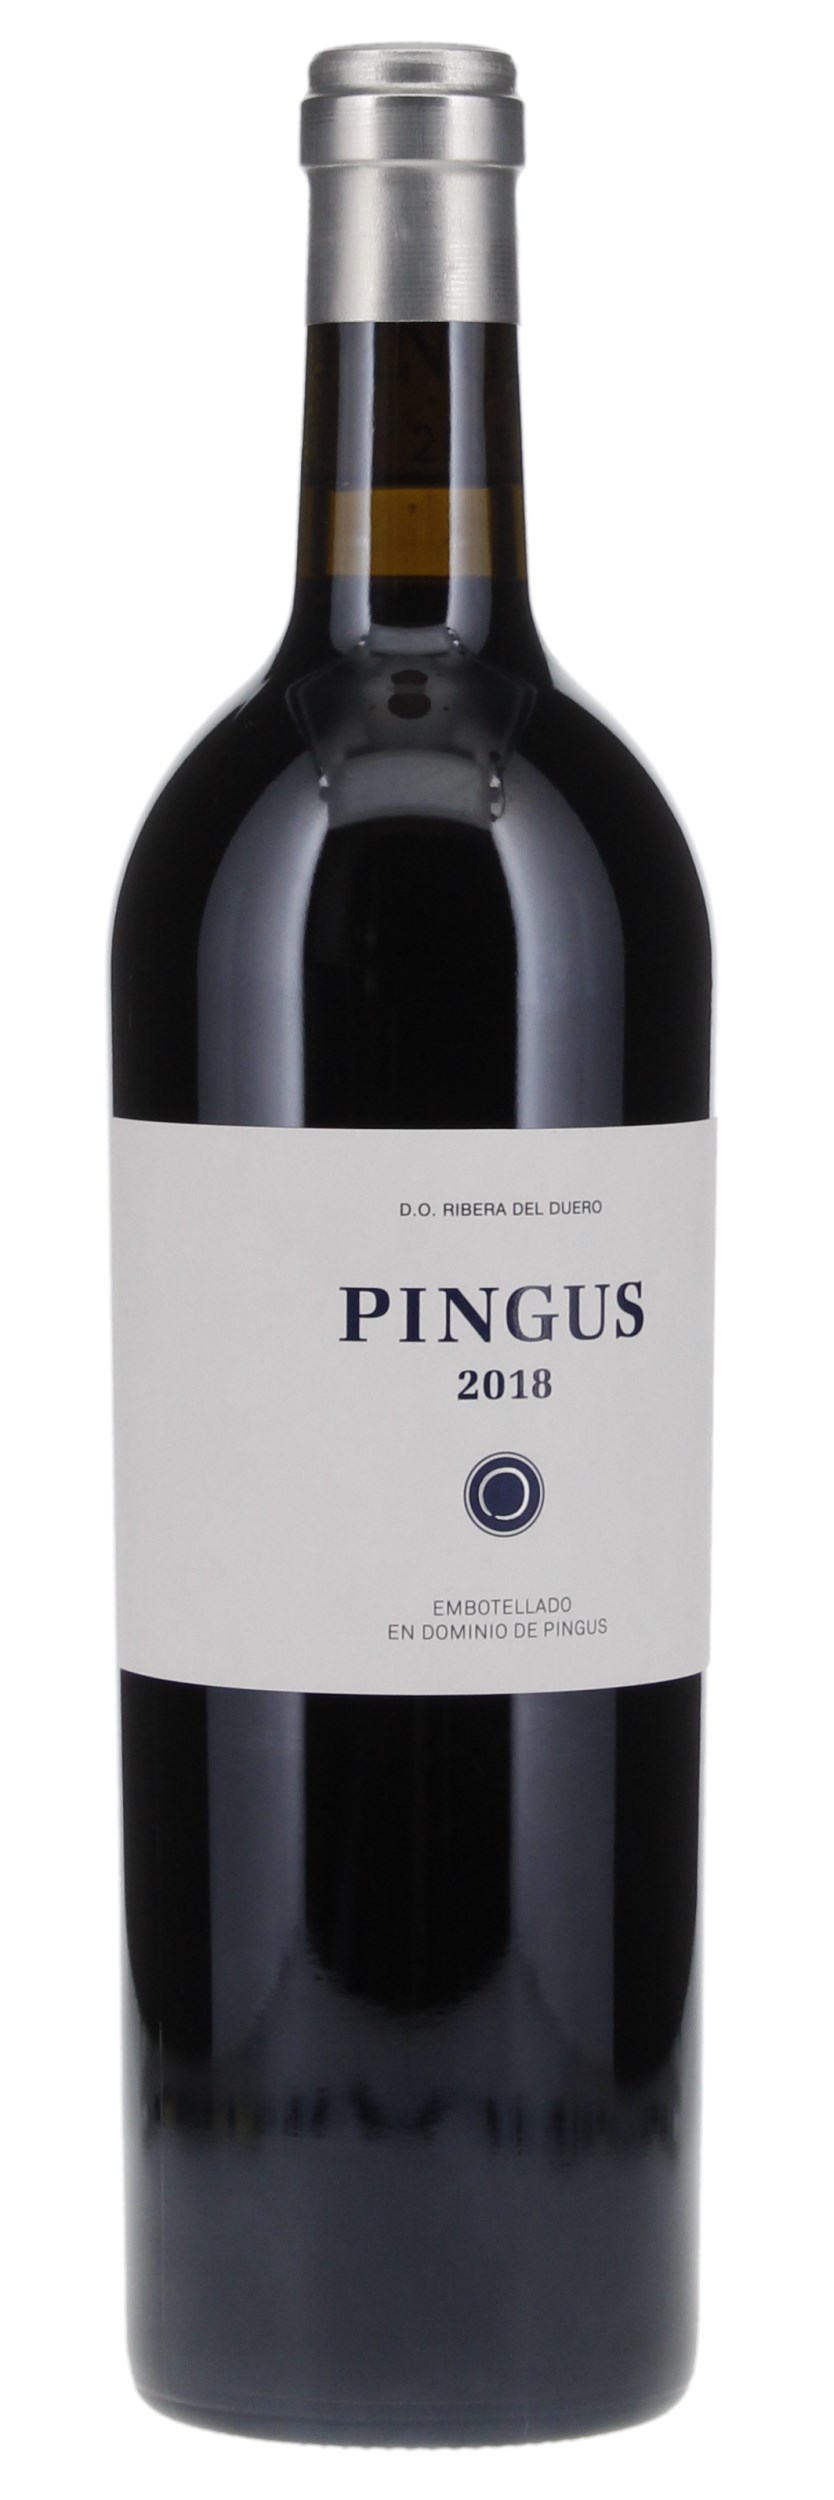 2018 Dominio de Pingus "Pingus", 750ml